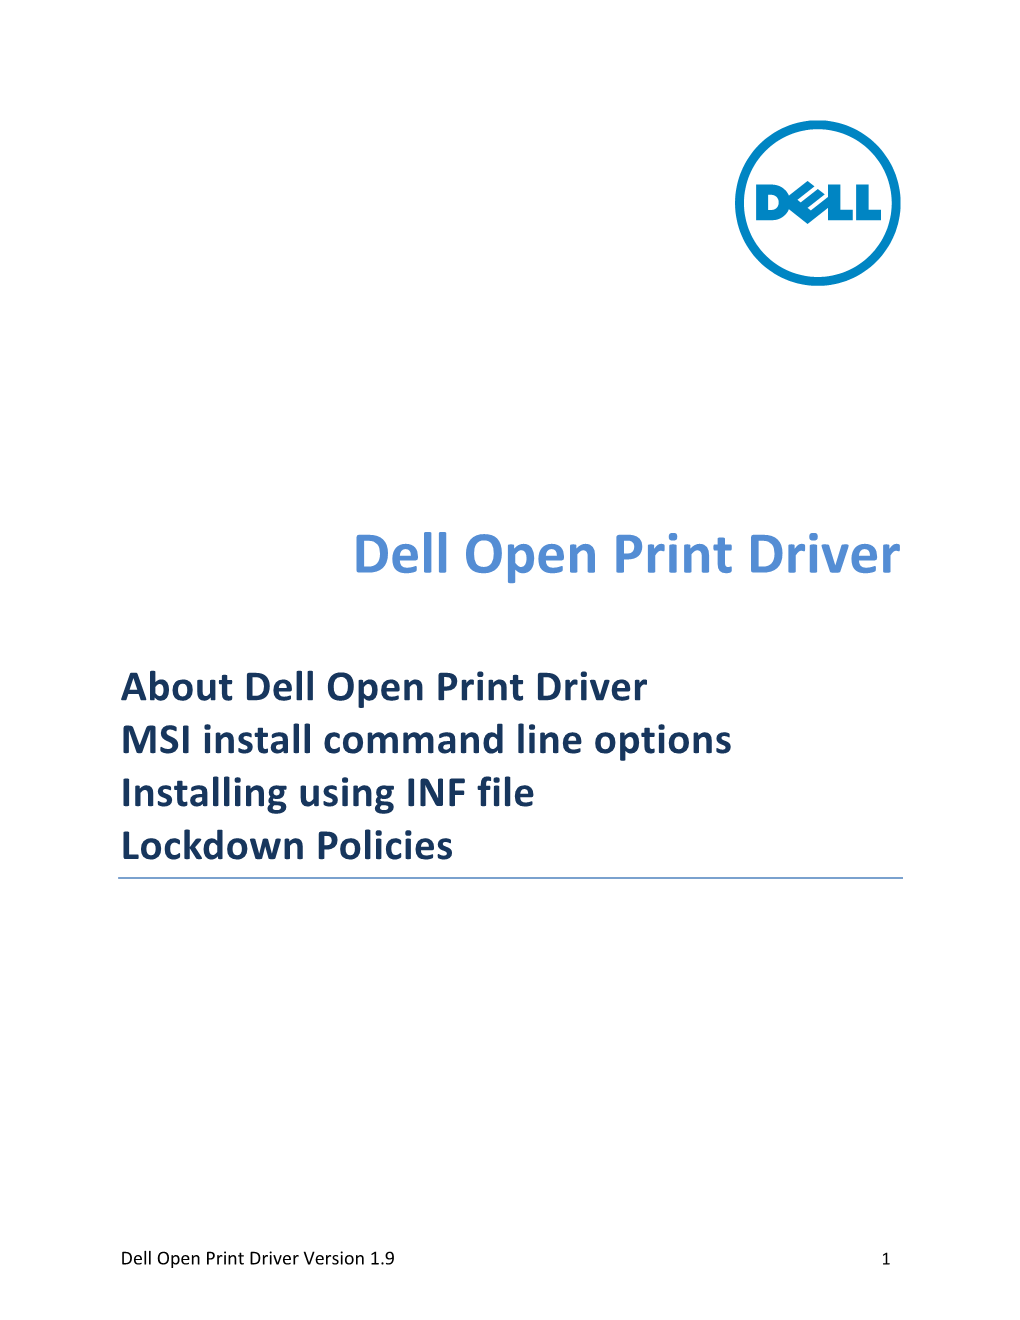 Dell Open Print Driver Administrator's Guide